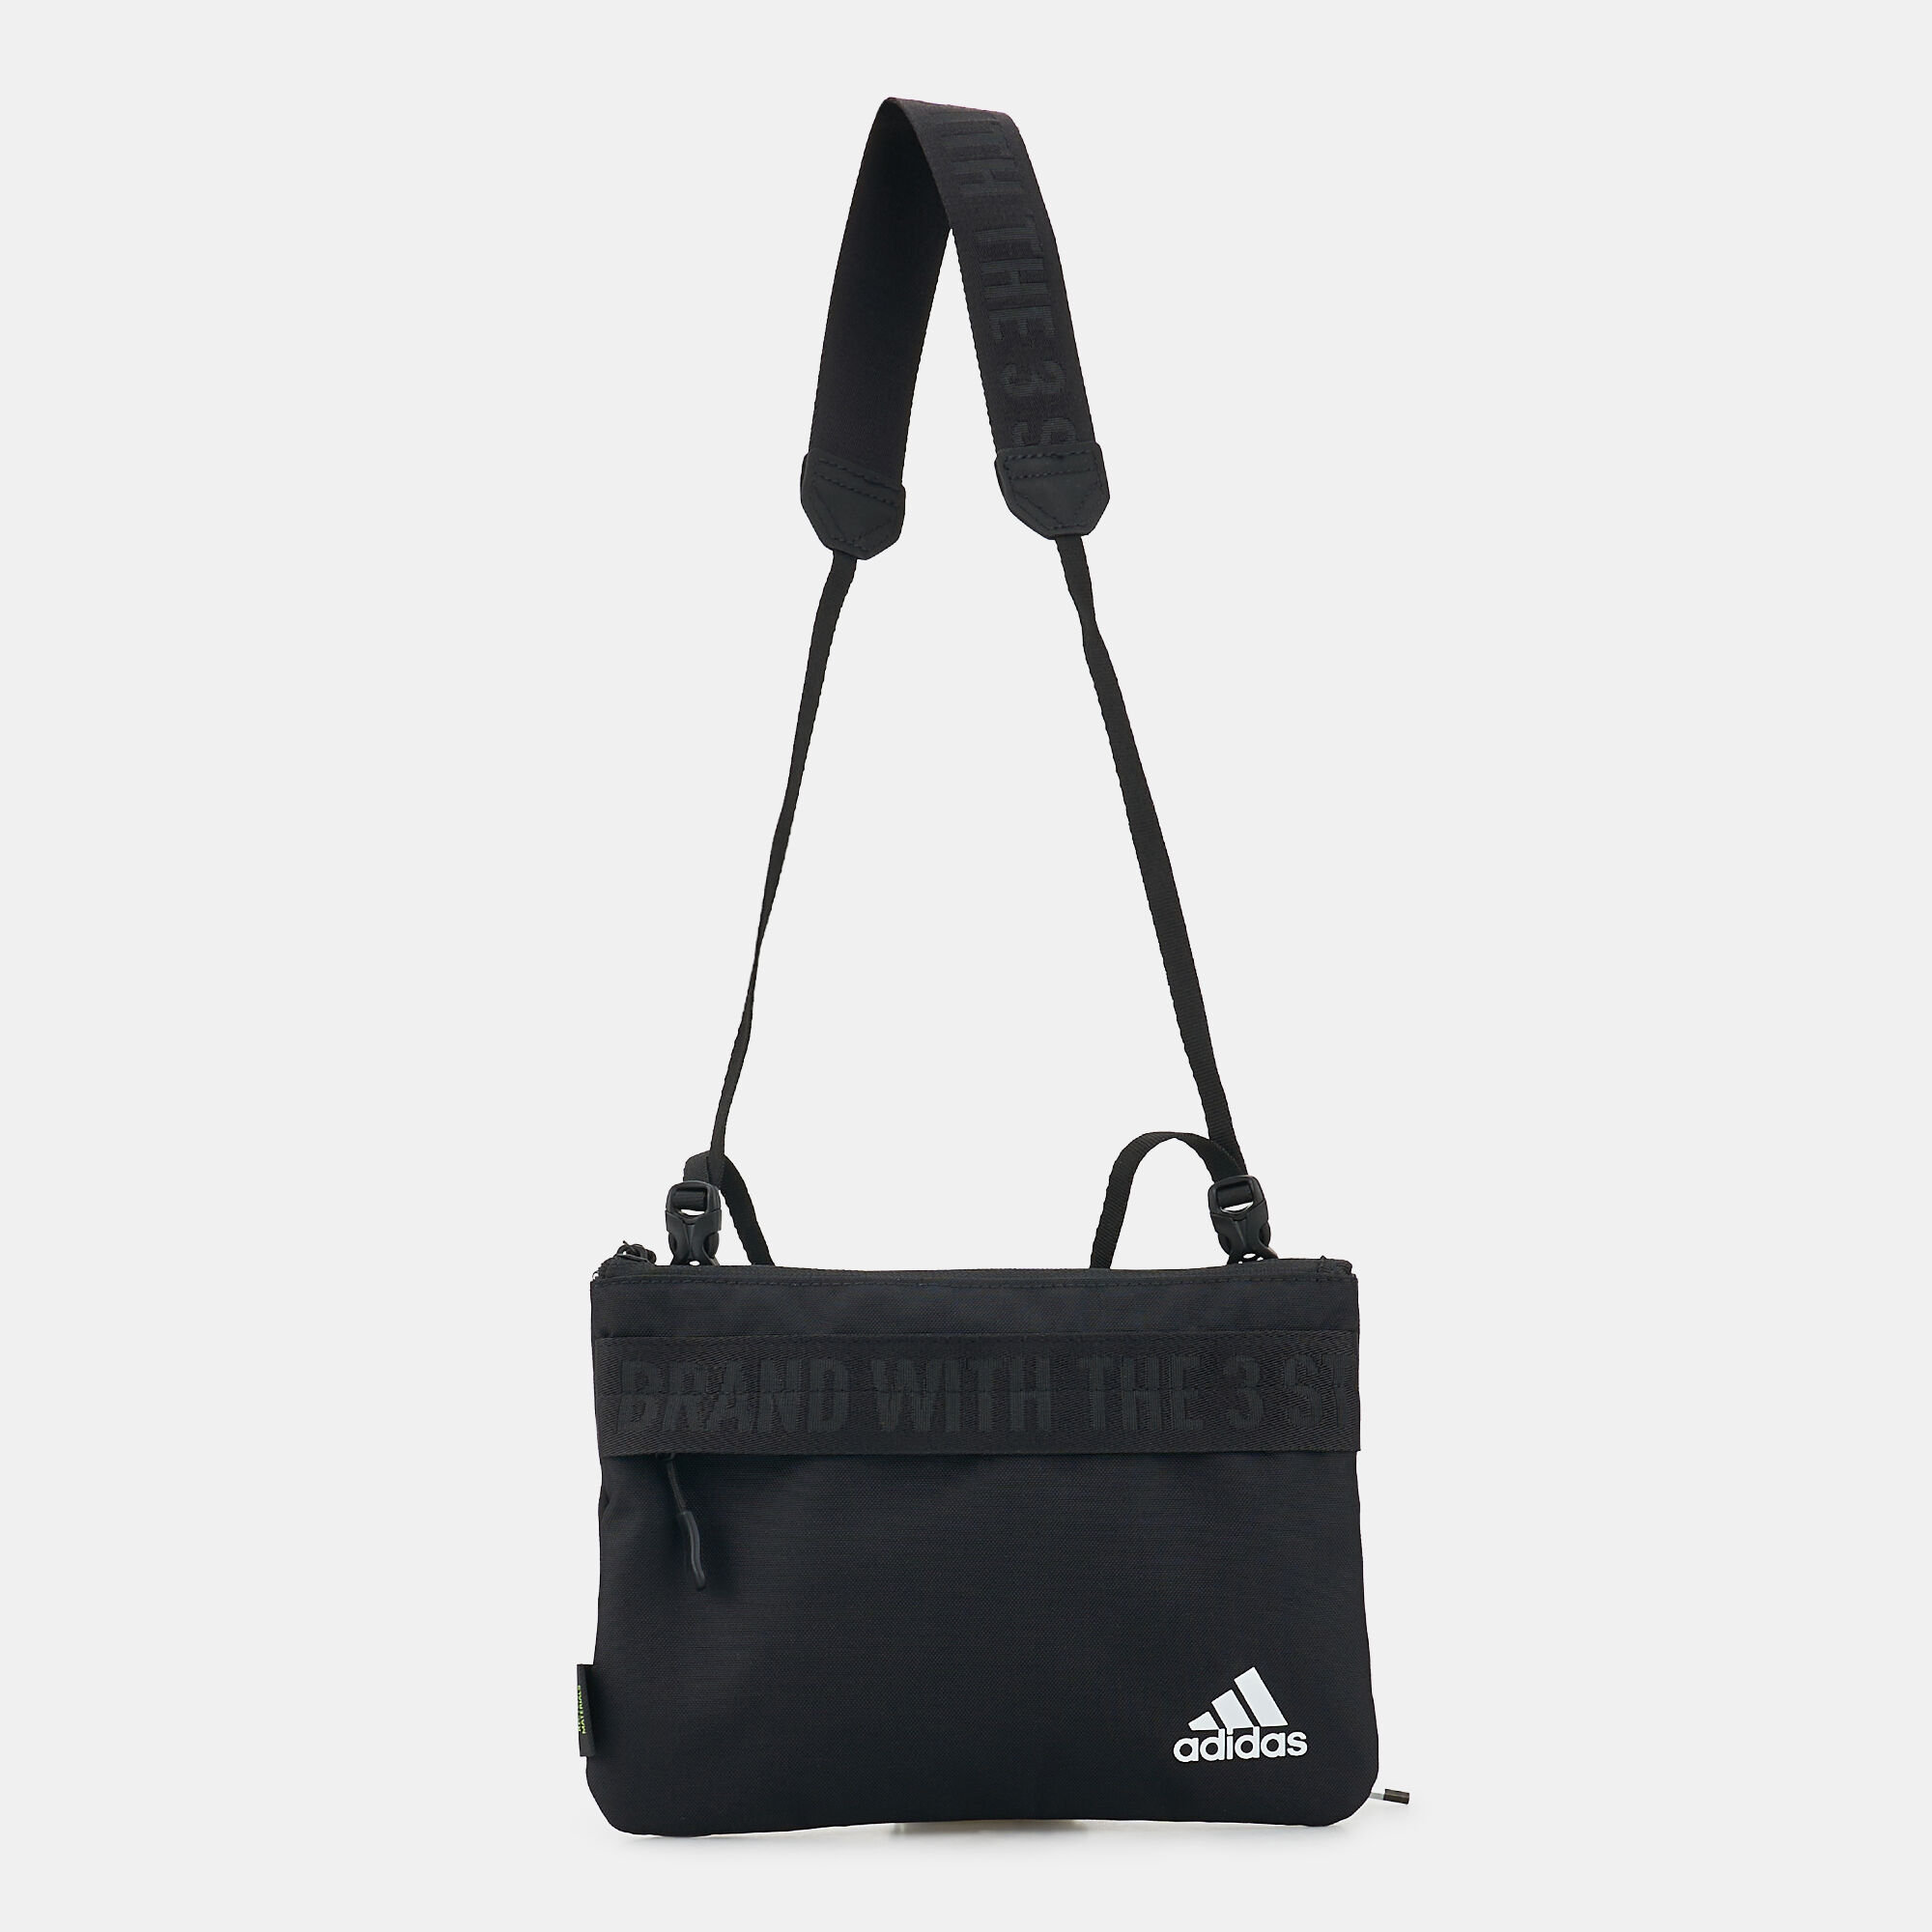 Buy adidas Unisex Must Haves Sacoche SHOULDER BAG, BLACK, One Size,  SHOULDER BAG at Amazon.in